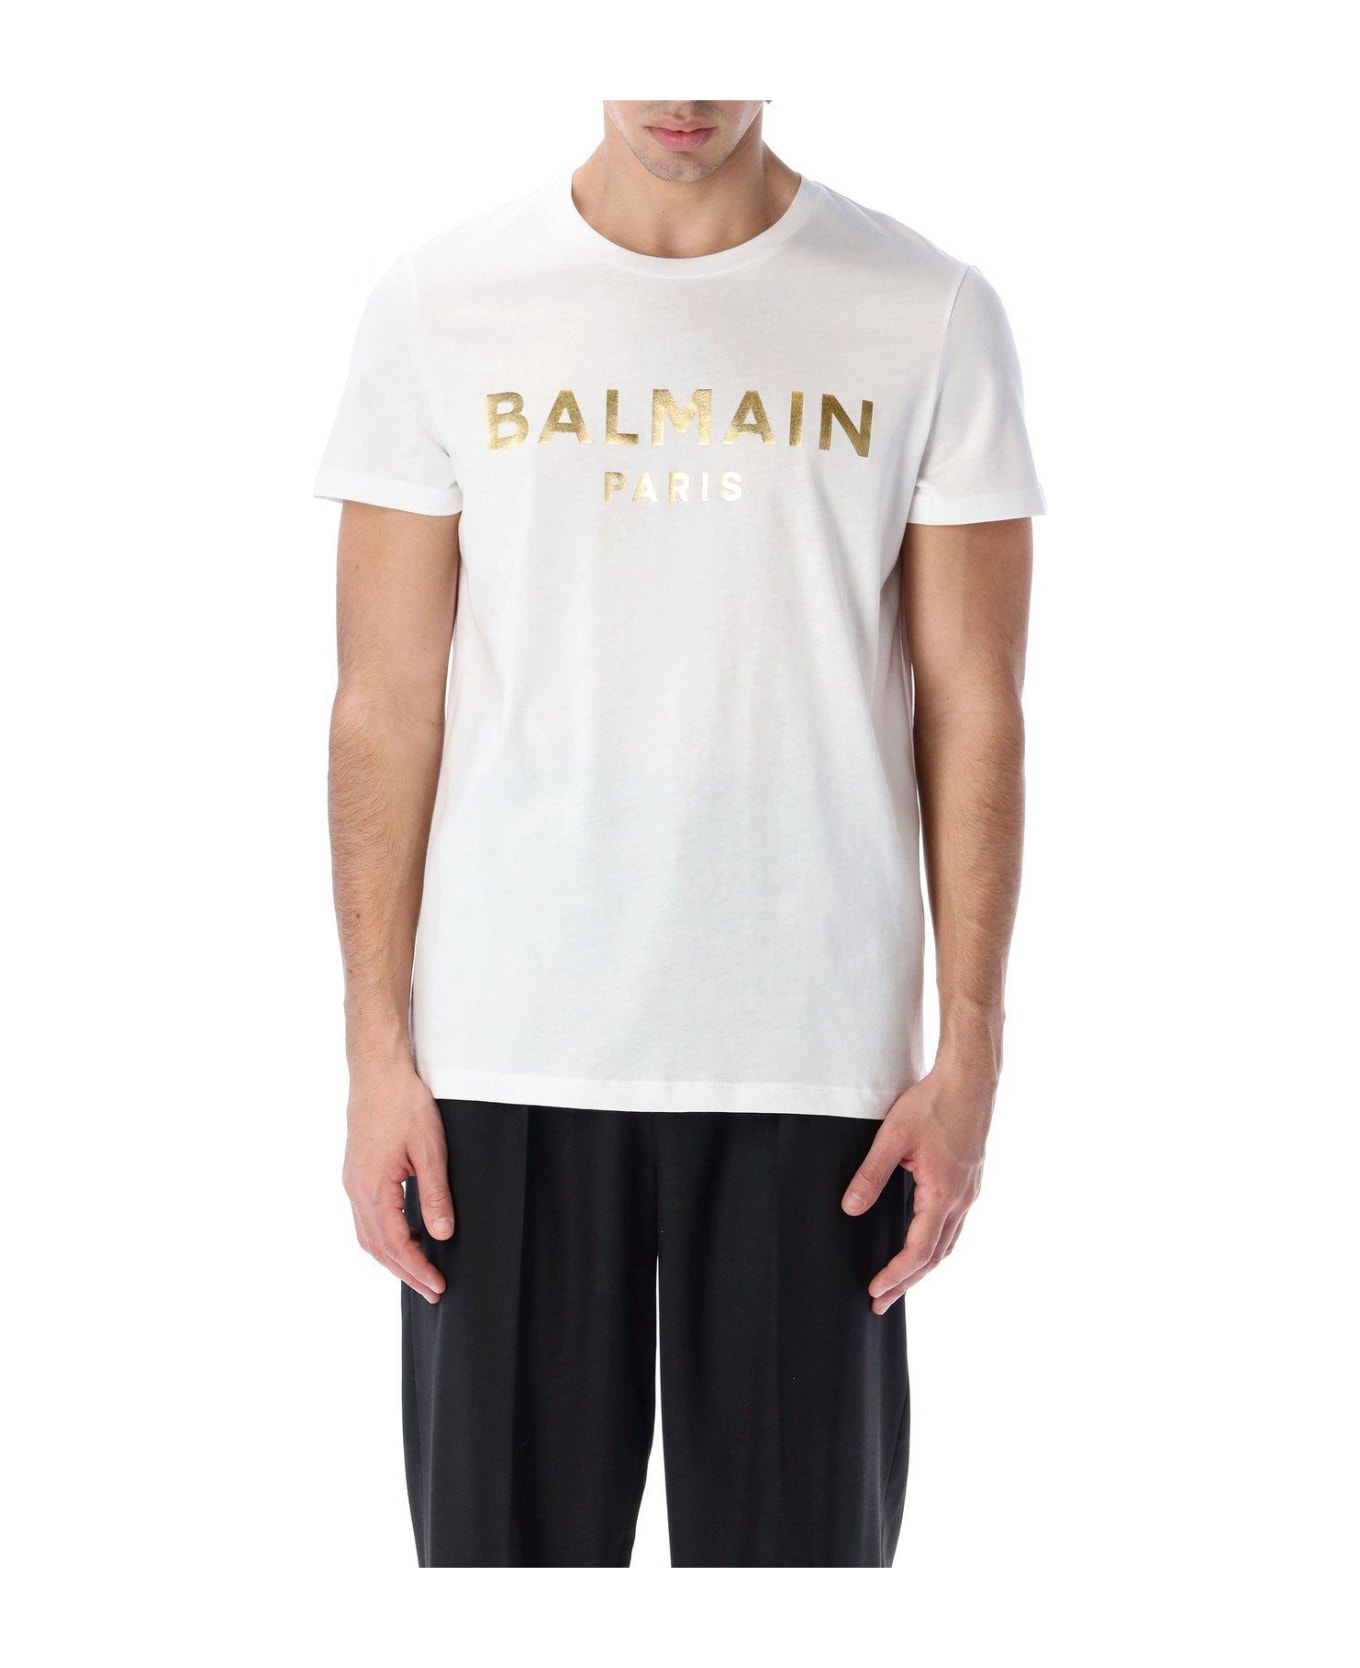 Balmain Logo Printed Crewneck T-shirt - White